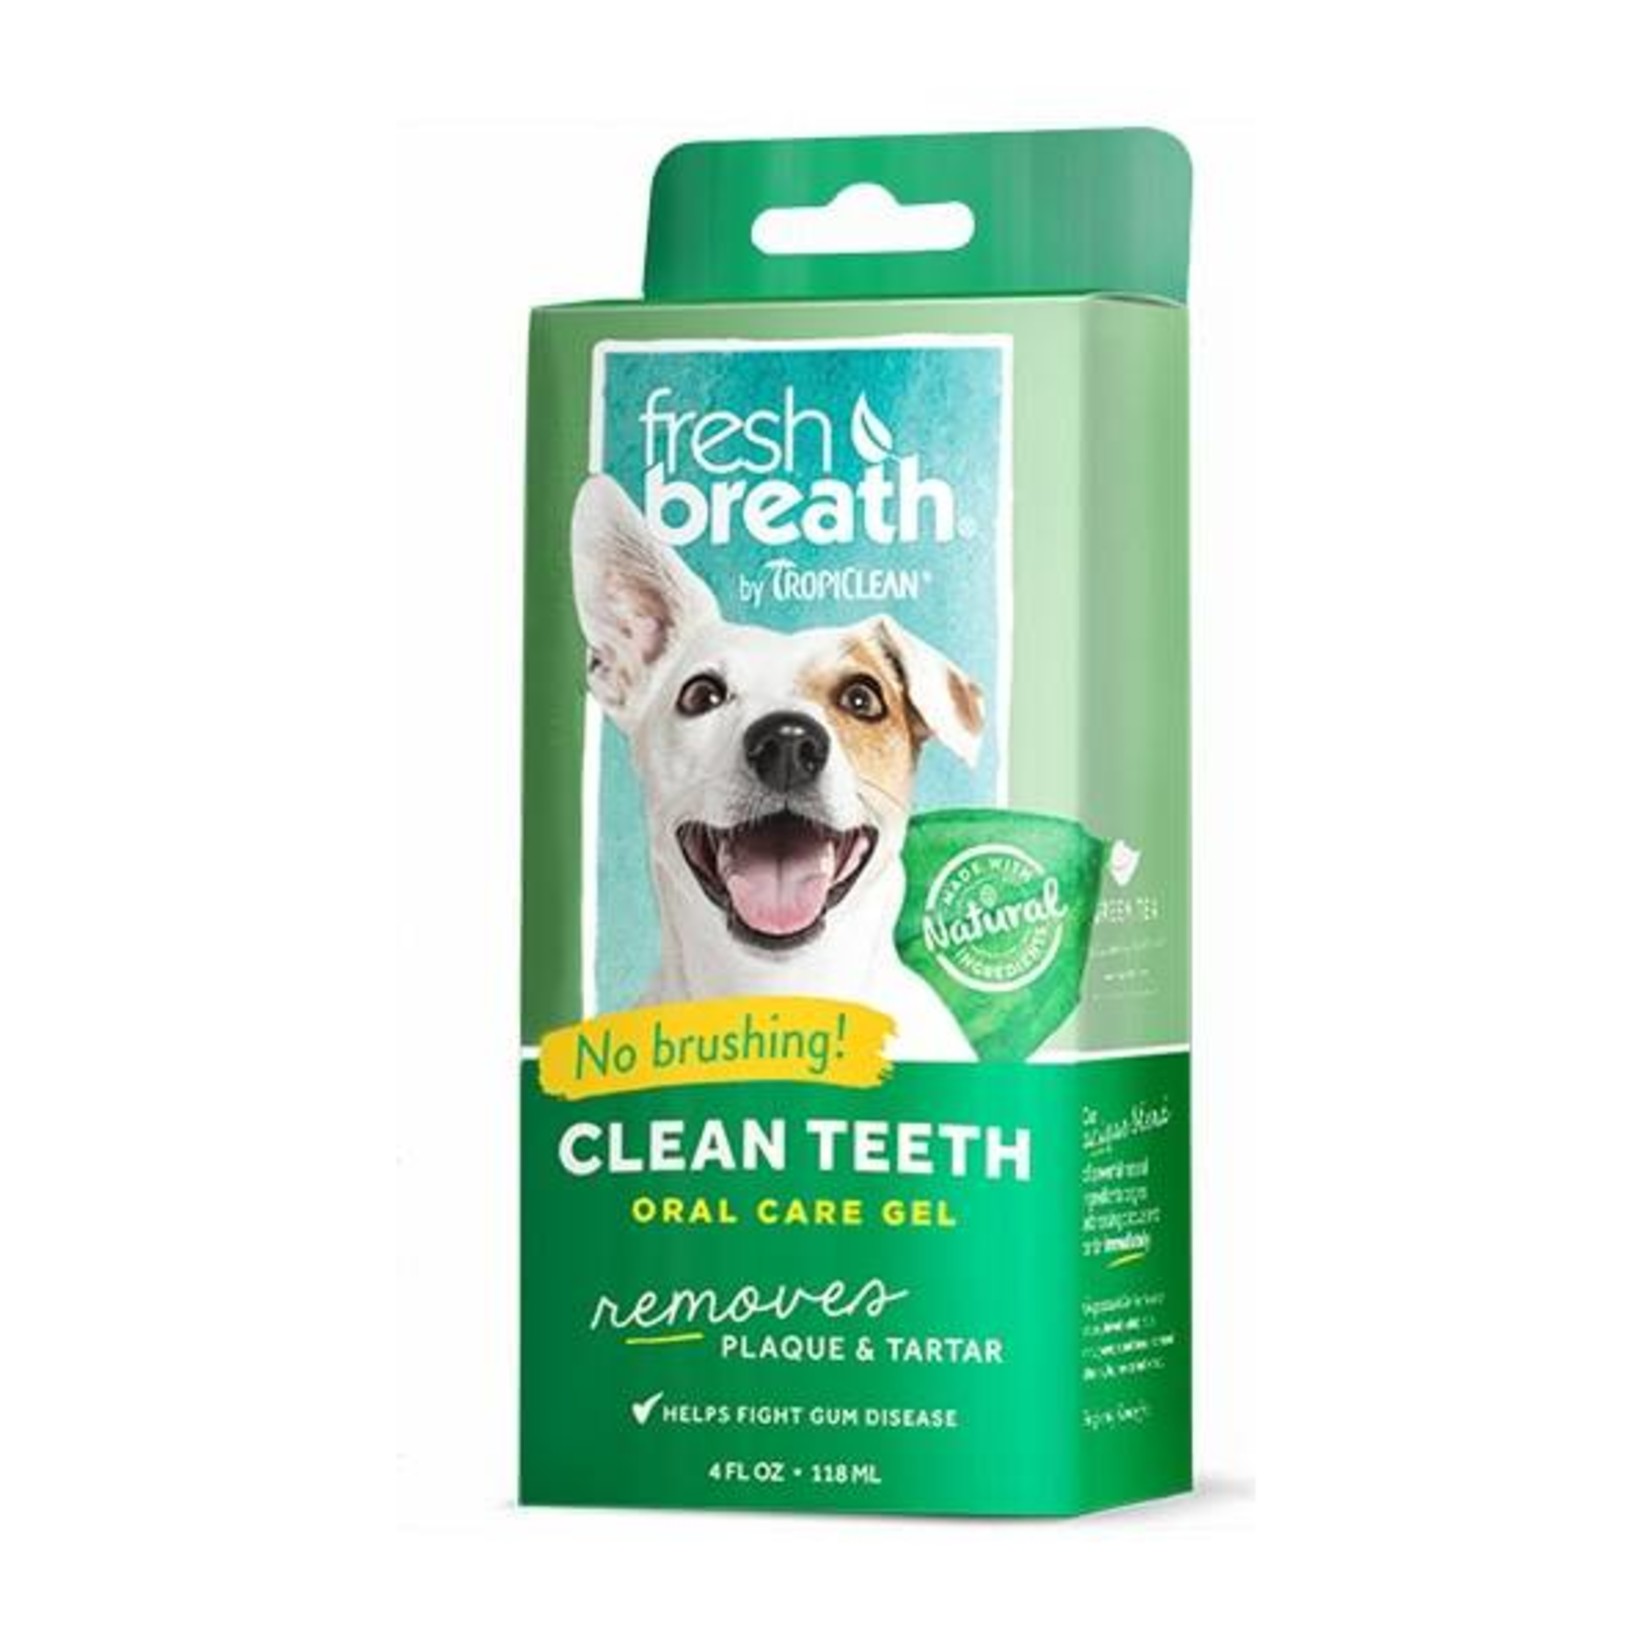 TropiClean Oral Care Clean Teeth Gel for Dogs, 118ml